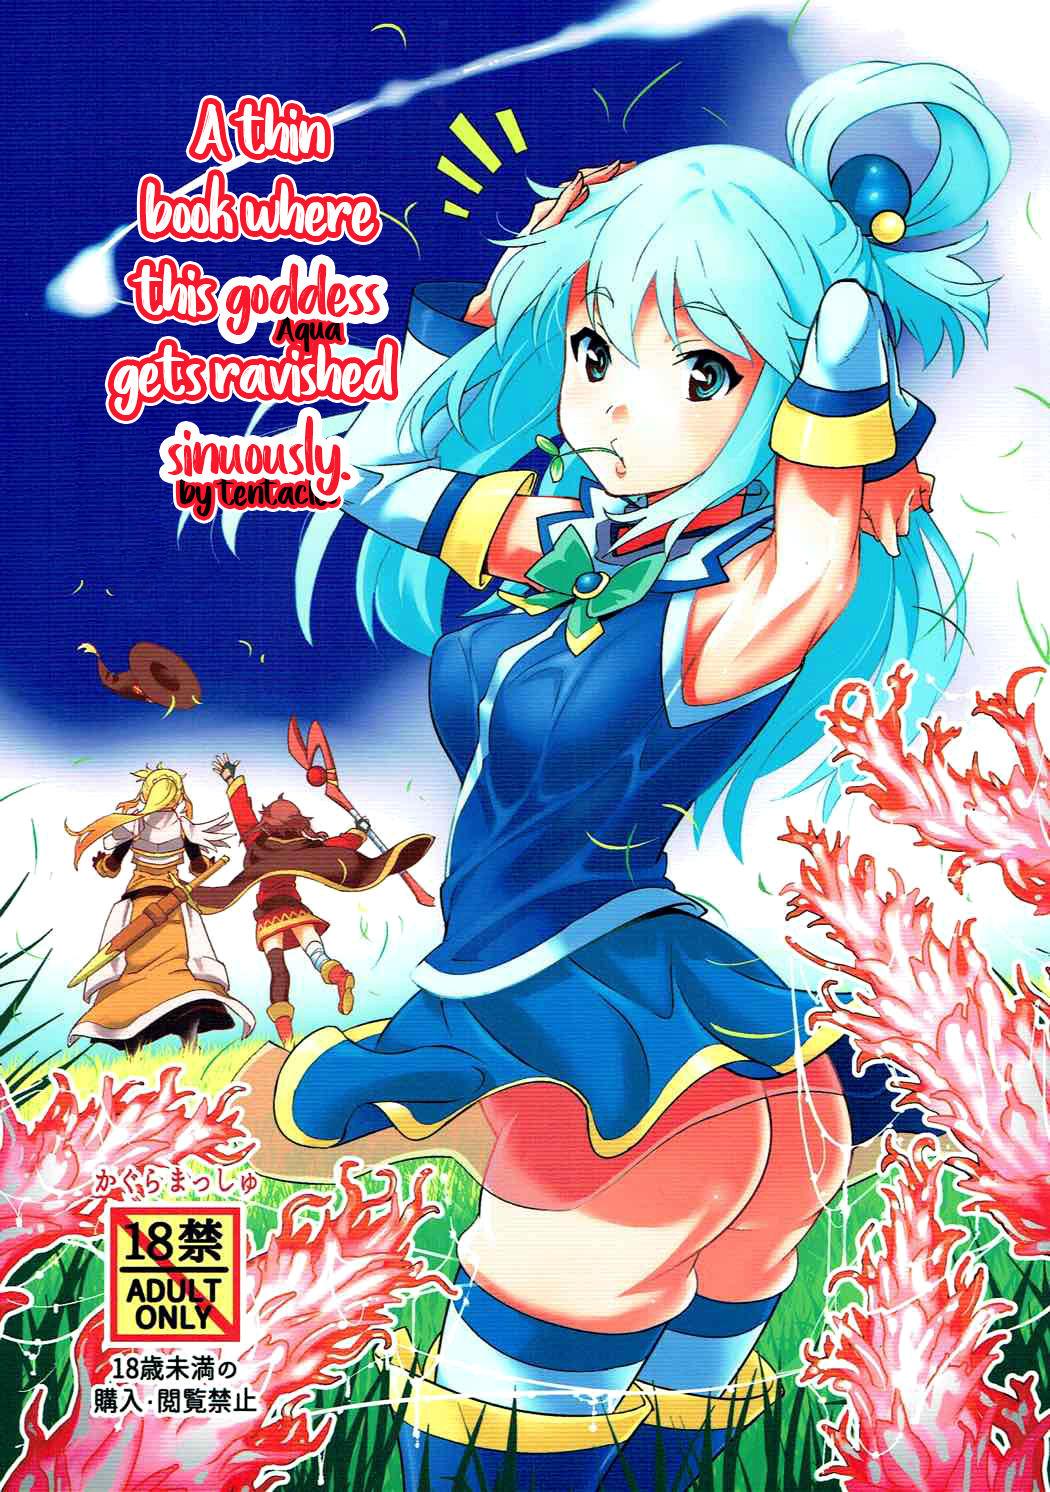 Kono Megami o Uneune Okasu Usui Hon | A thin book where this goddess gets ravished sinuously 0